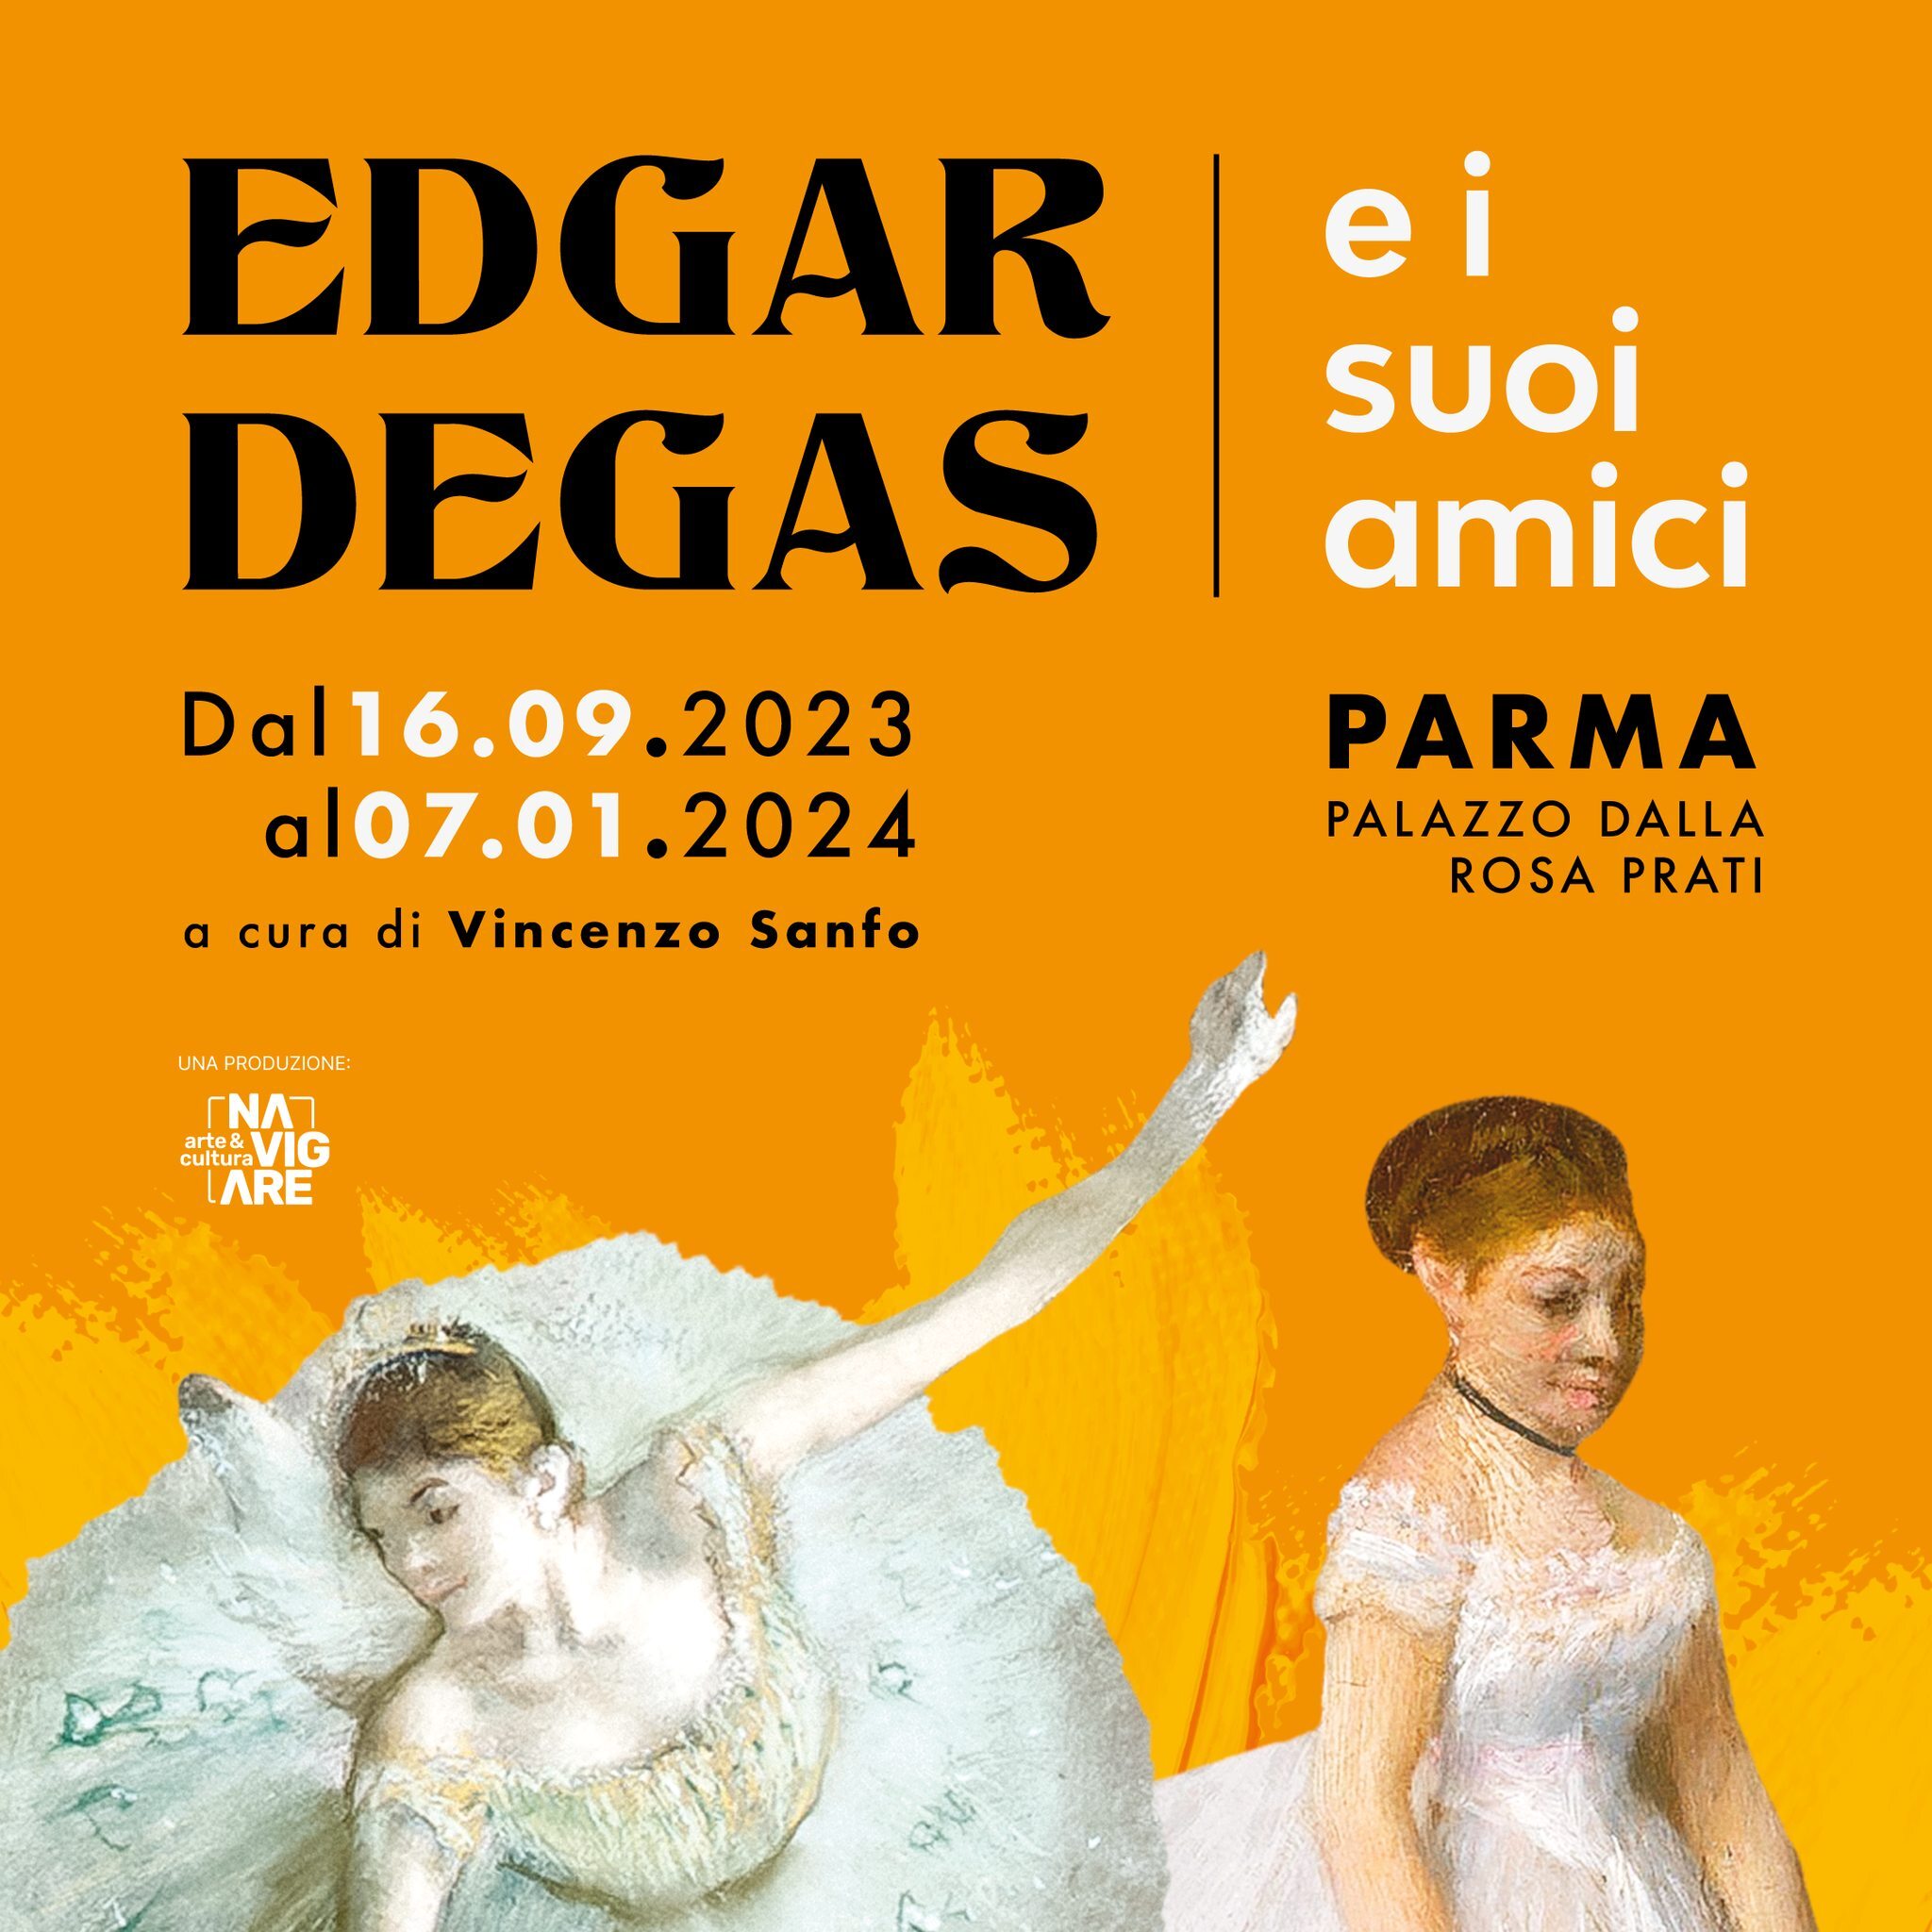 Edgar Degas e i suoi amici in mostra a Parma